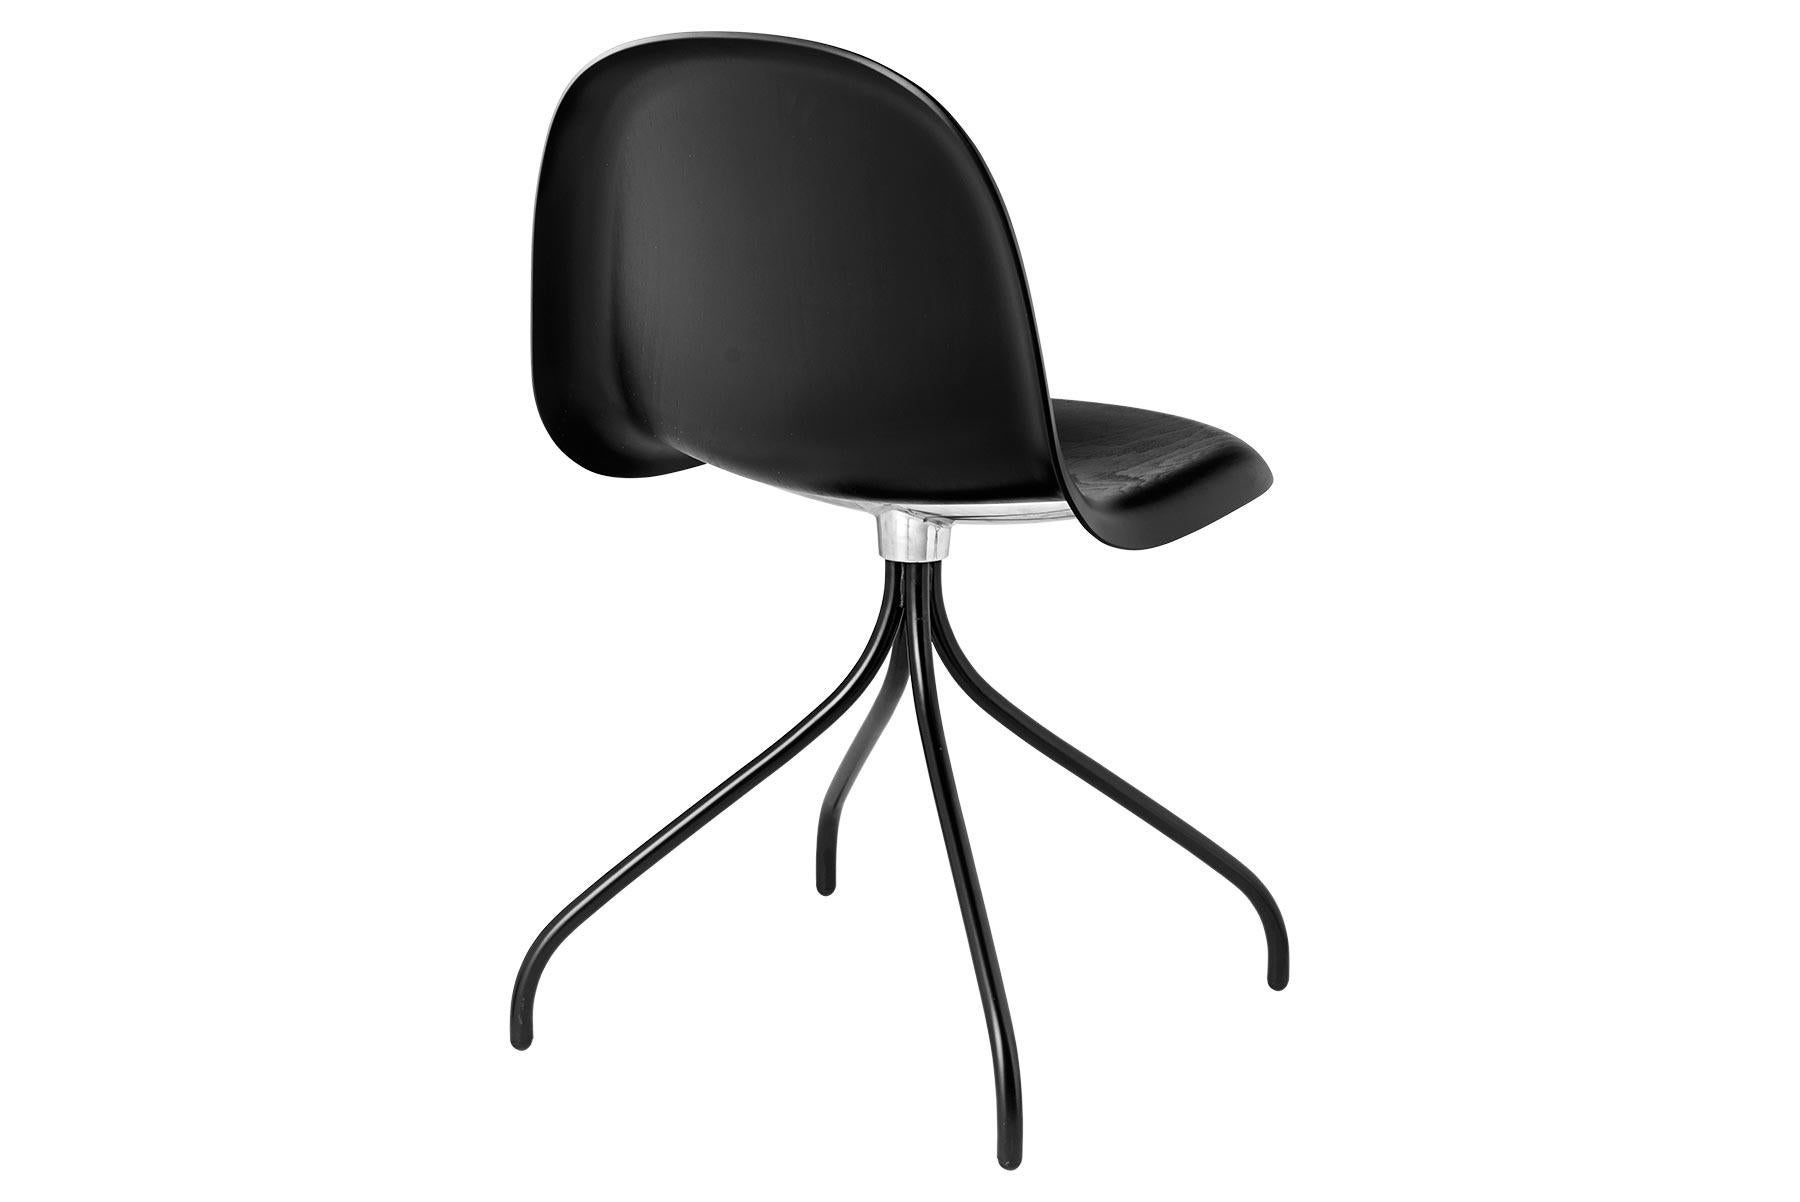 3D-Meetingsstuhl, vorne gepolstert, schwarzer drehbarer Sockel (Dänisch) im Angebot